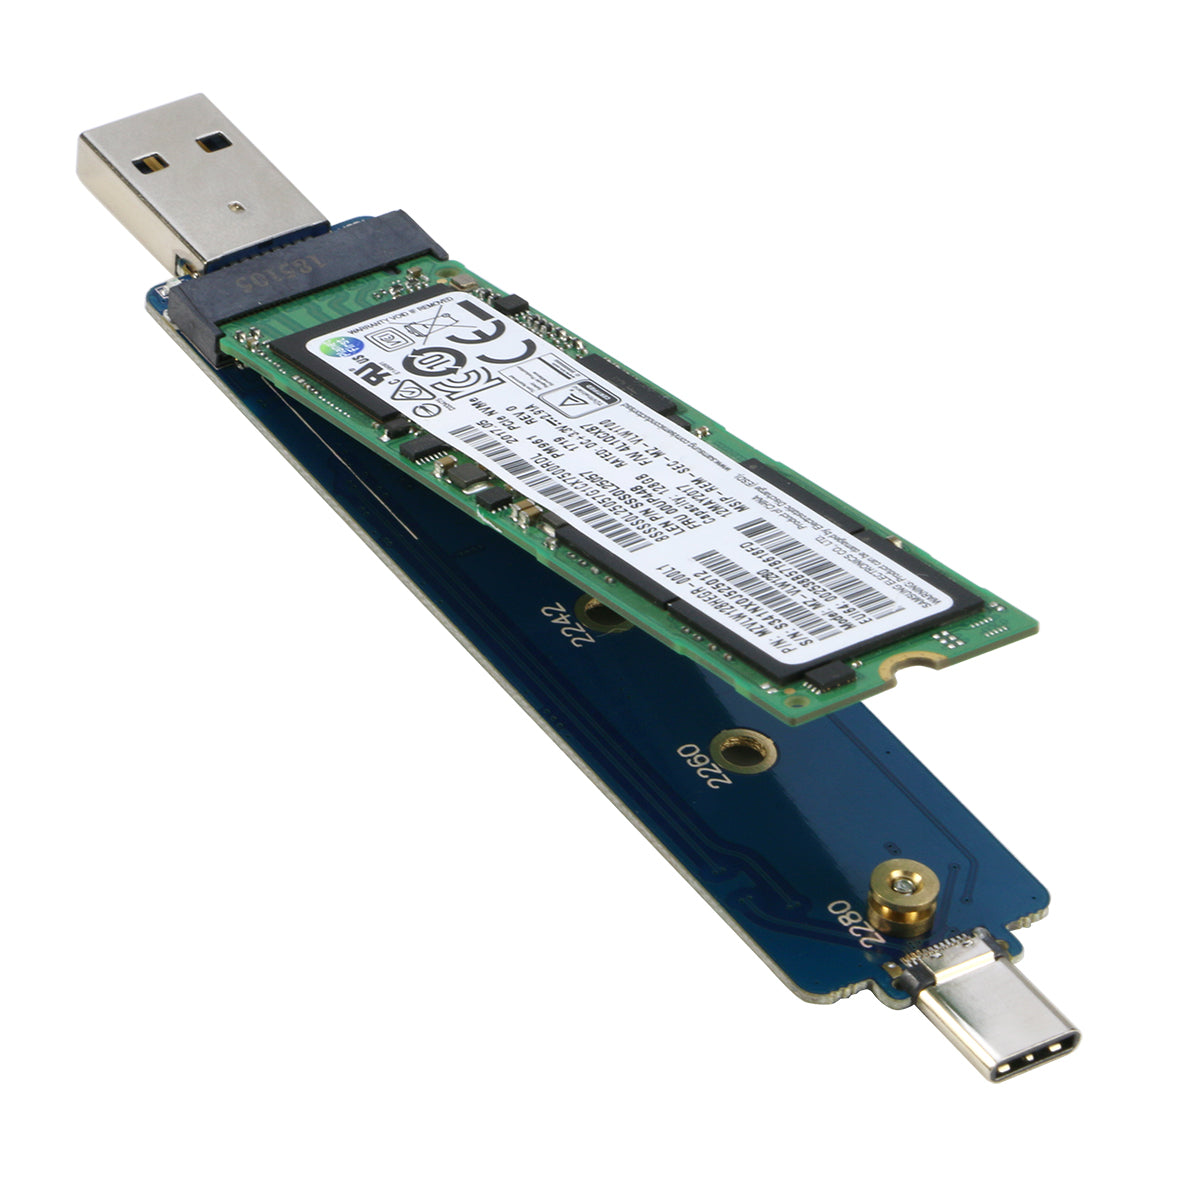 Strædet thong bestikke Plys dukke RIITOP NVMe USB Adapter PCIe M.2 NVME SSD to USB 3.1 Gen2 Type A and T